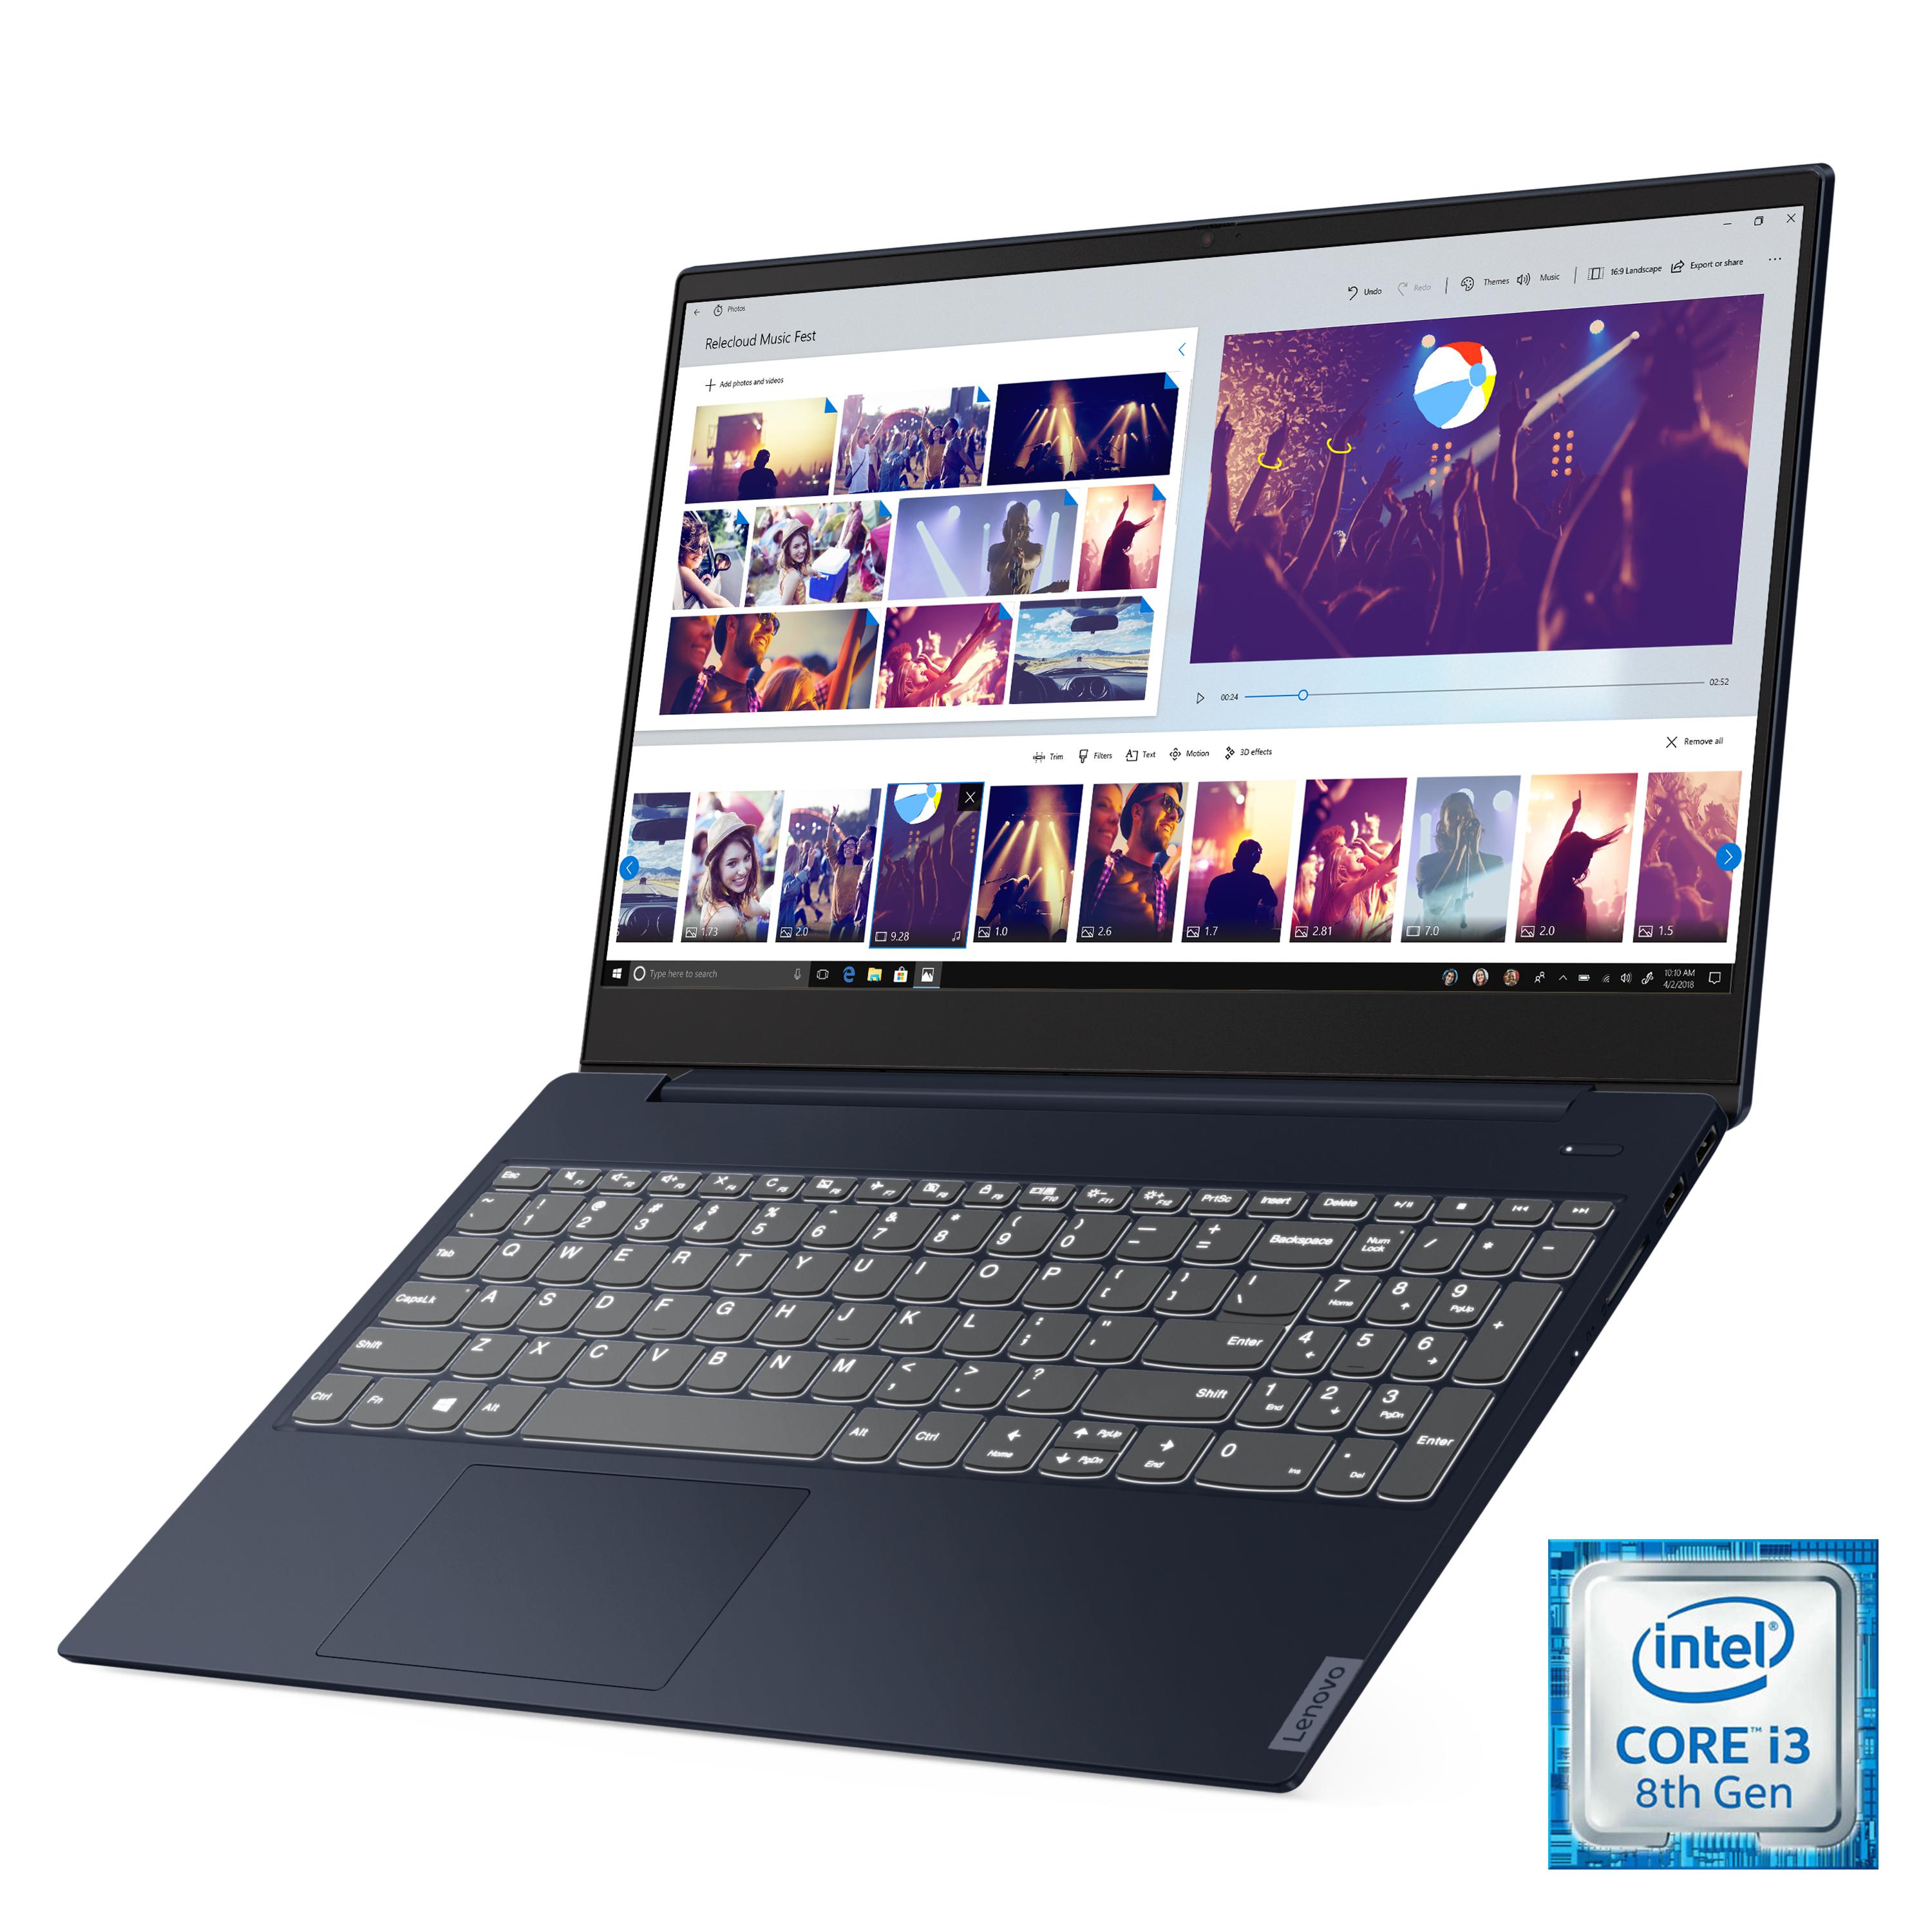 Lenovo ideapad S340 15.6" Laptop, Intel Core i3-8145U Dual-Core Processor, 8GB Memory, 128GB Solid State Drive, Windows 10 - Abyss Blue - 81N800H1US - image 1 of 18